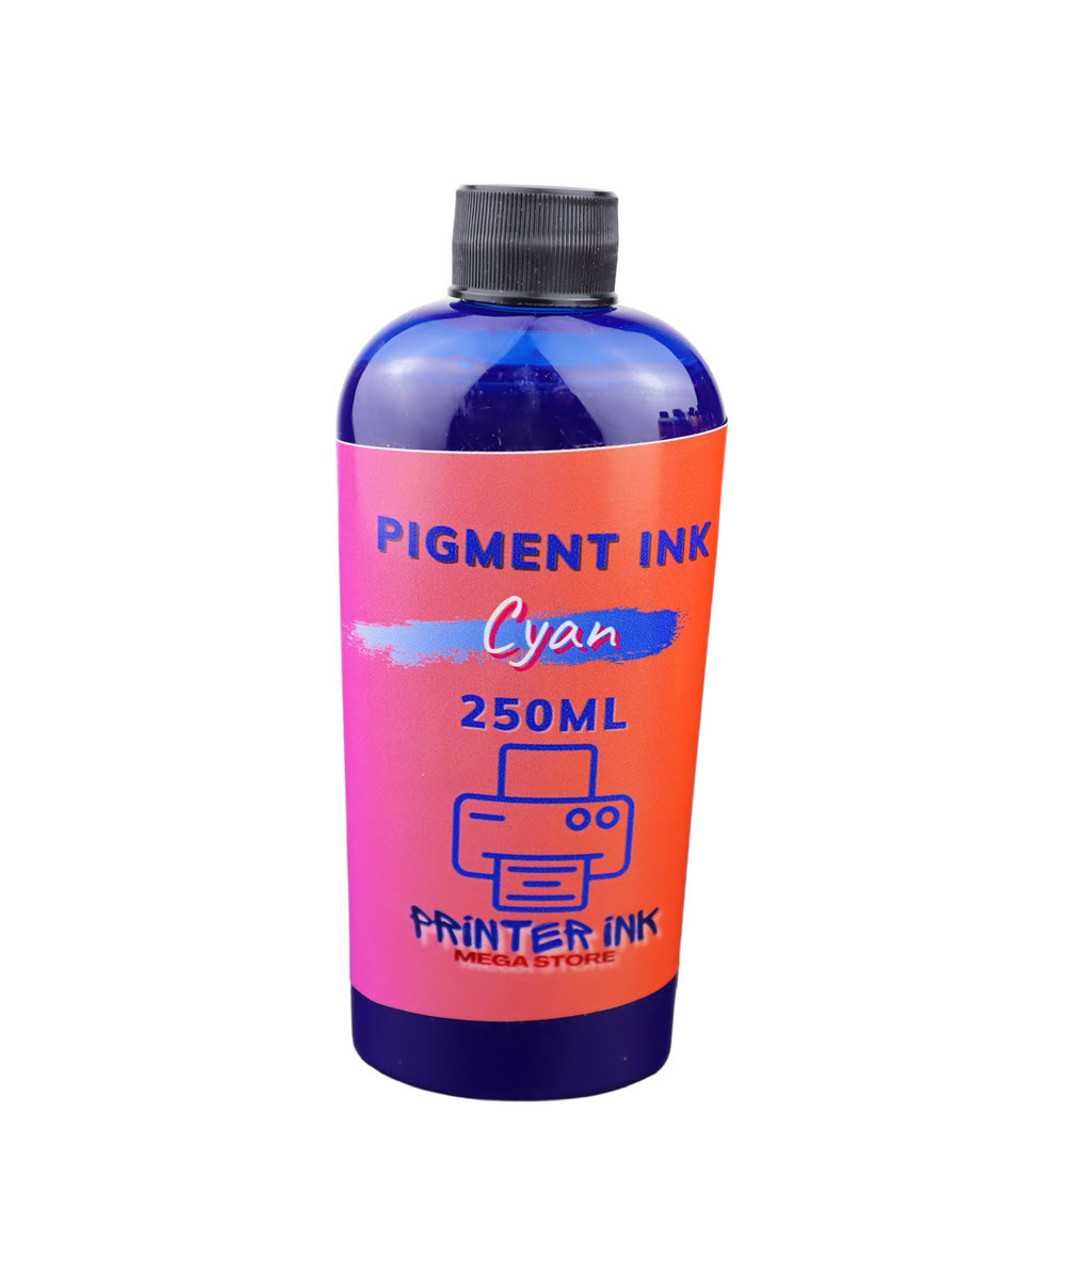 Cyan Pigment Ink 250ml bottle for Epson WorkForce Pro WF-3720 WF-3730 WF-3733 printers